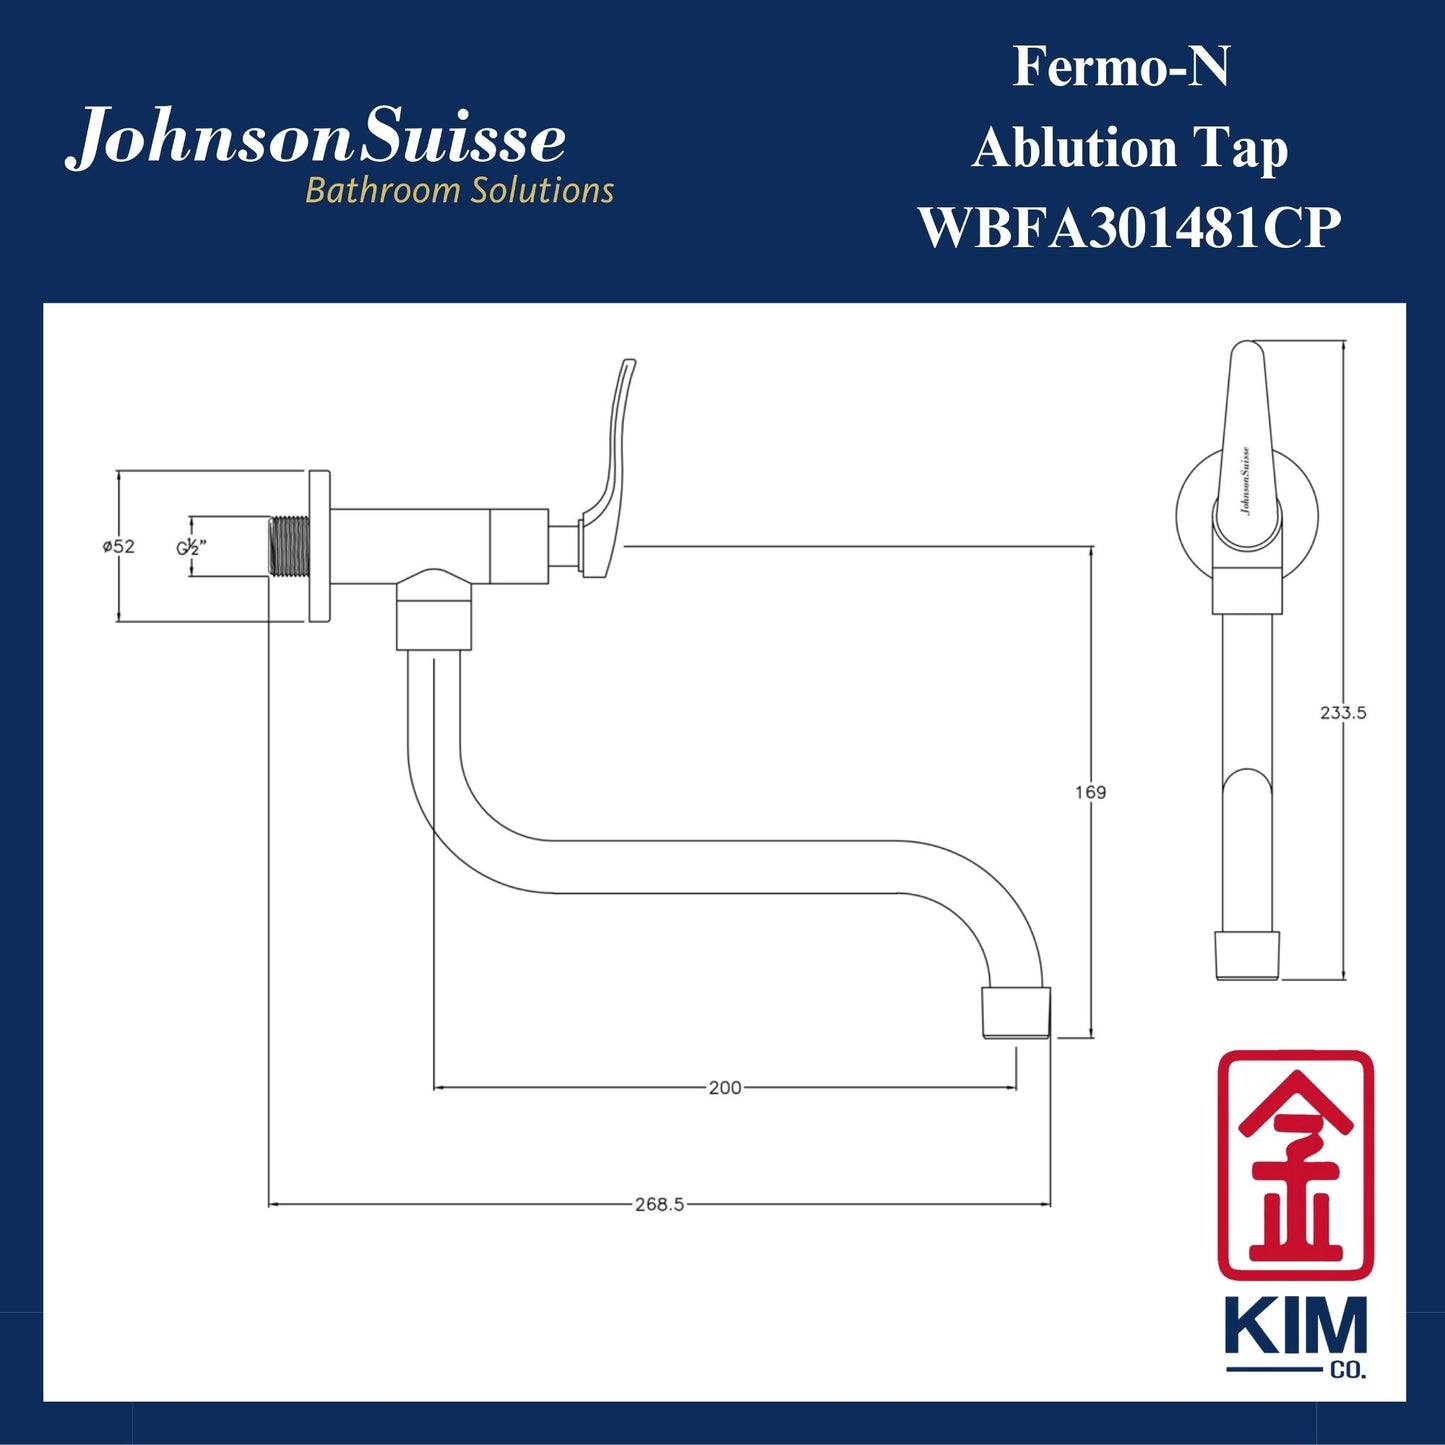 Johnson Suisse Fermo-N Ablution Tap (WBFA301481CP)